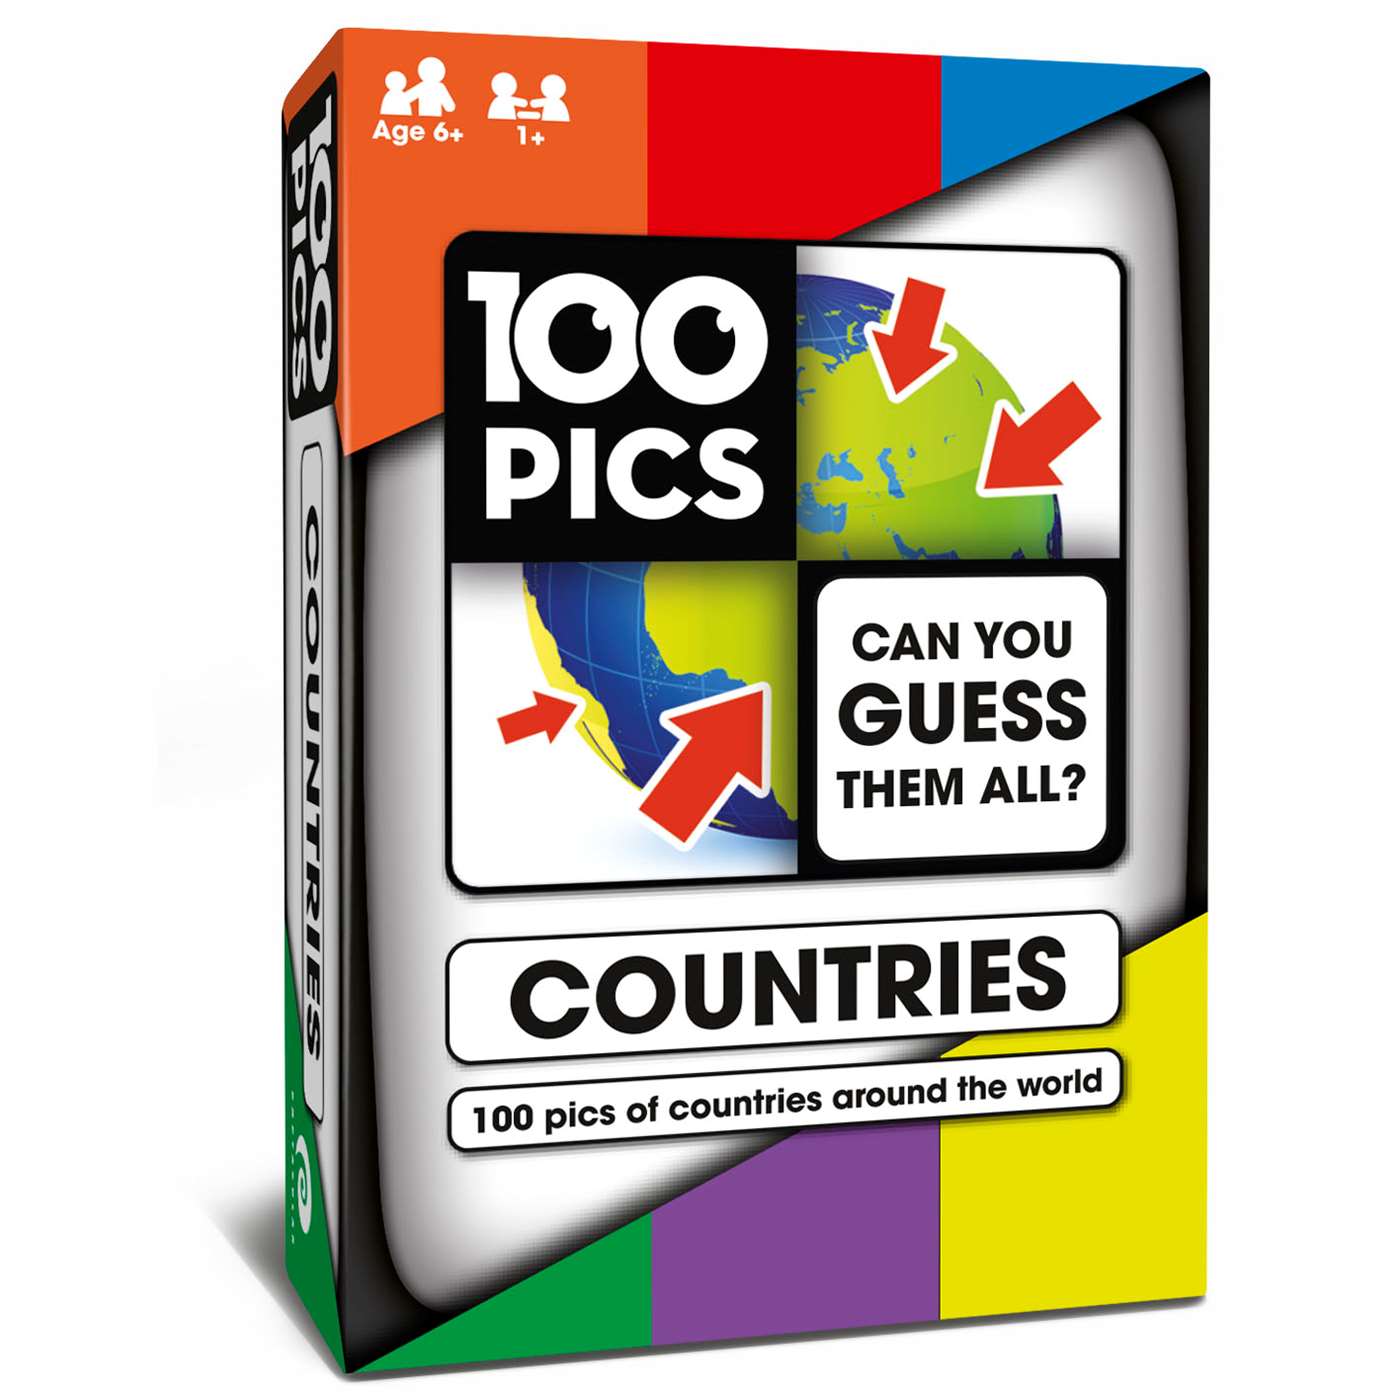 100 PICS - COUNTRIES  Image